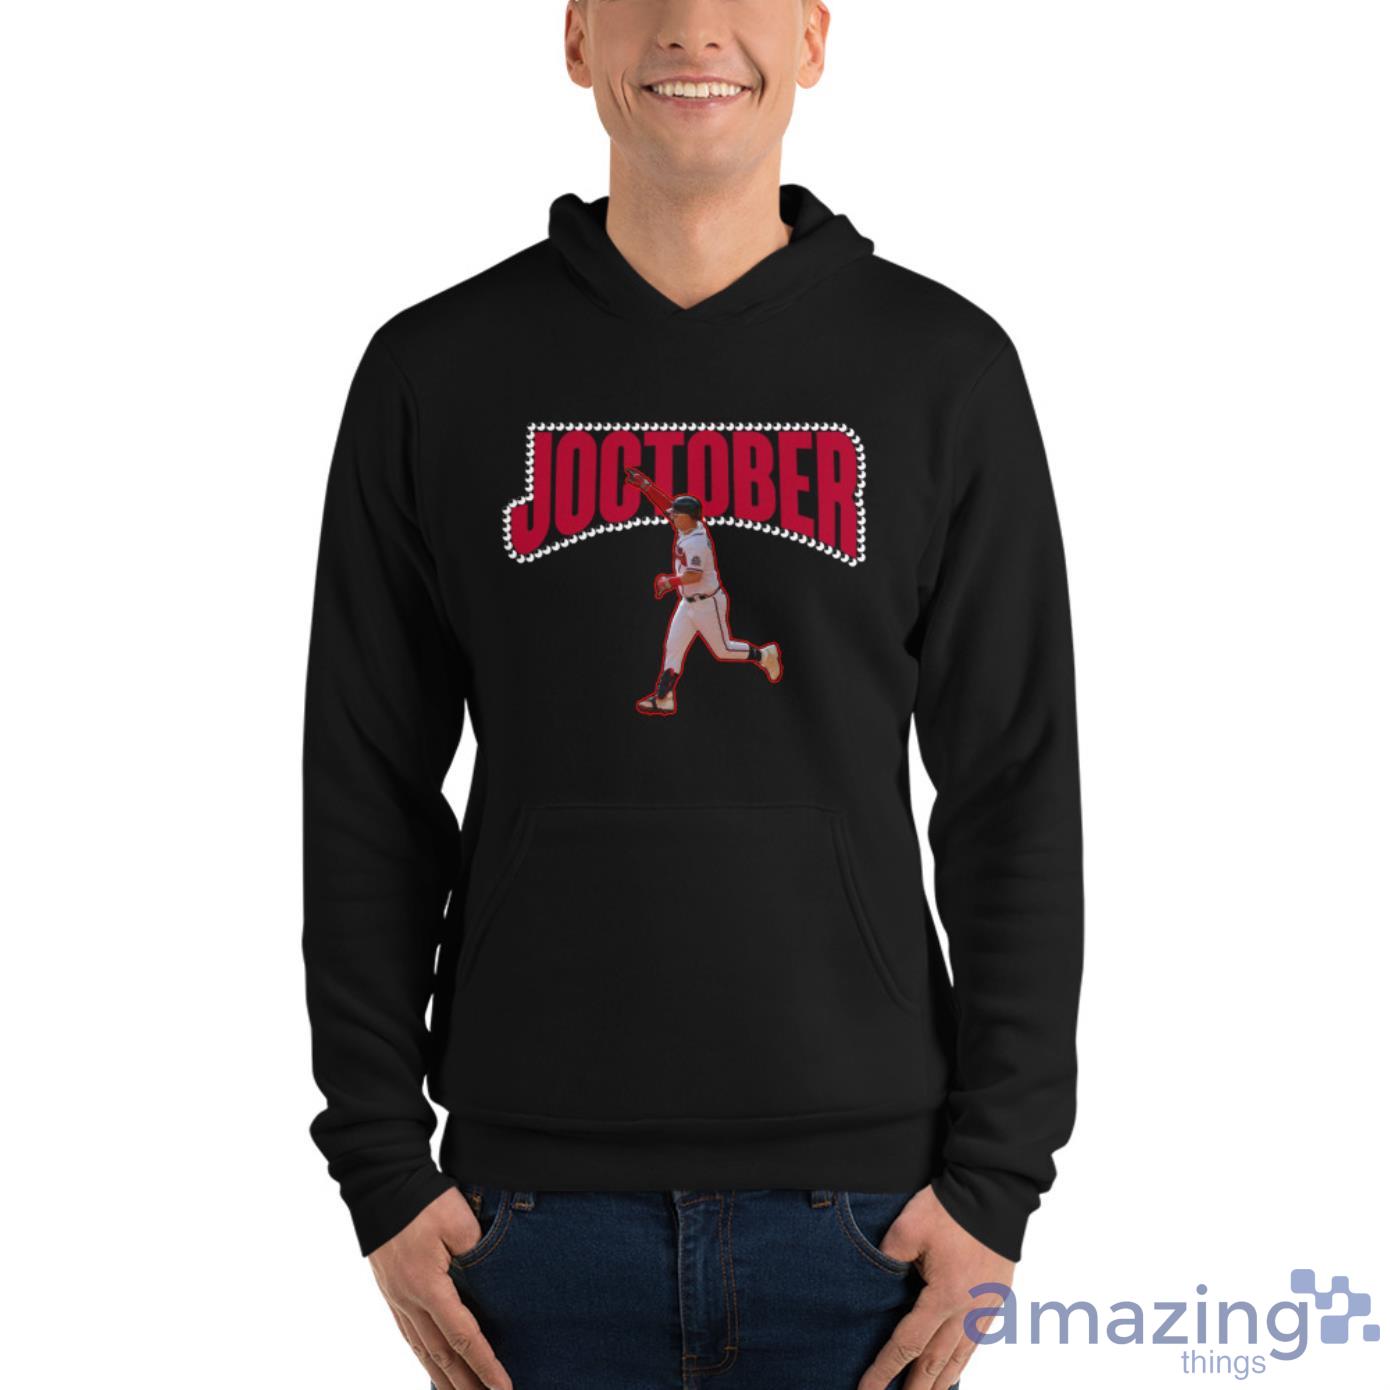 Joc Pederson Jersey Classic T-Shirt Hoodie Sweatshirt